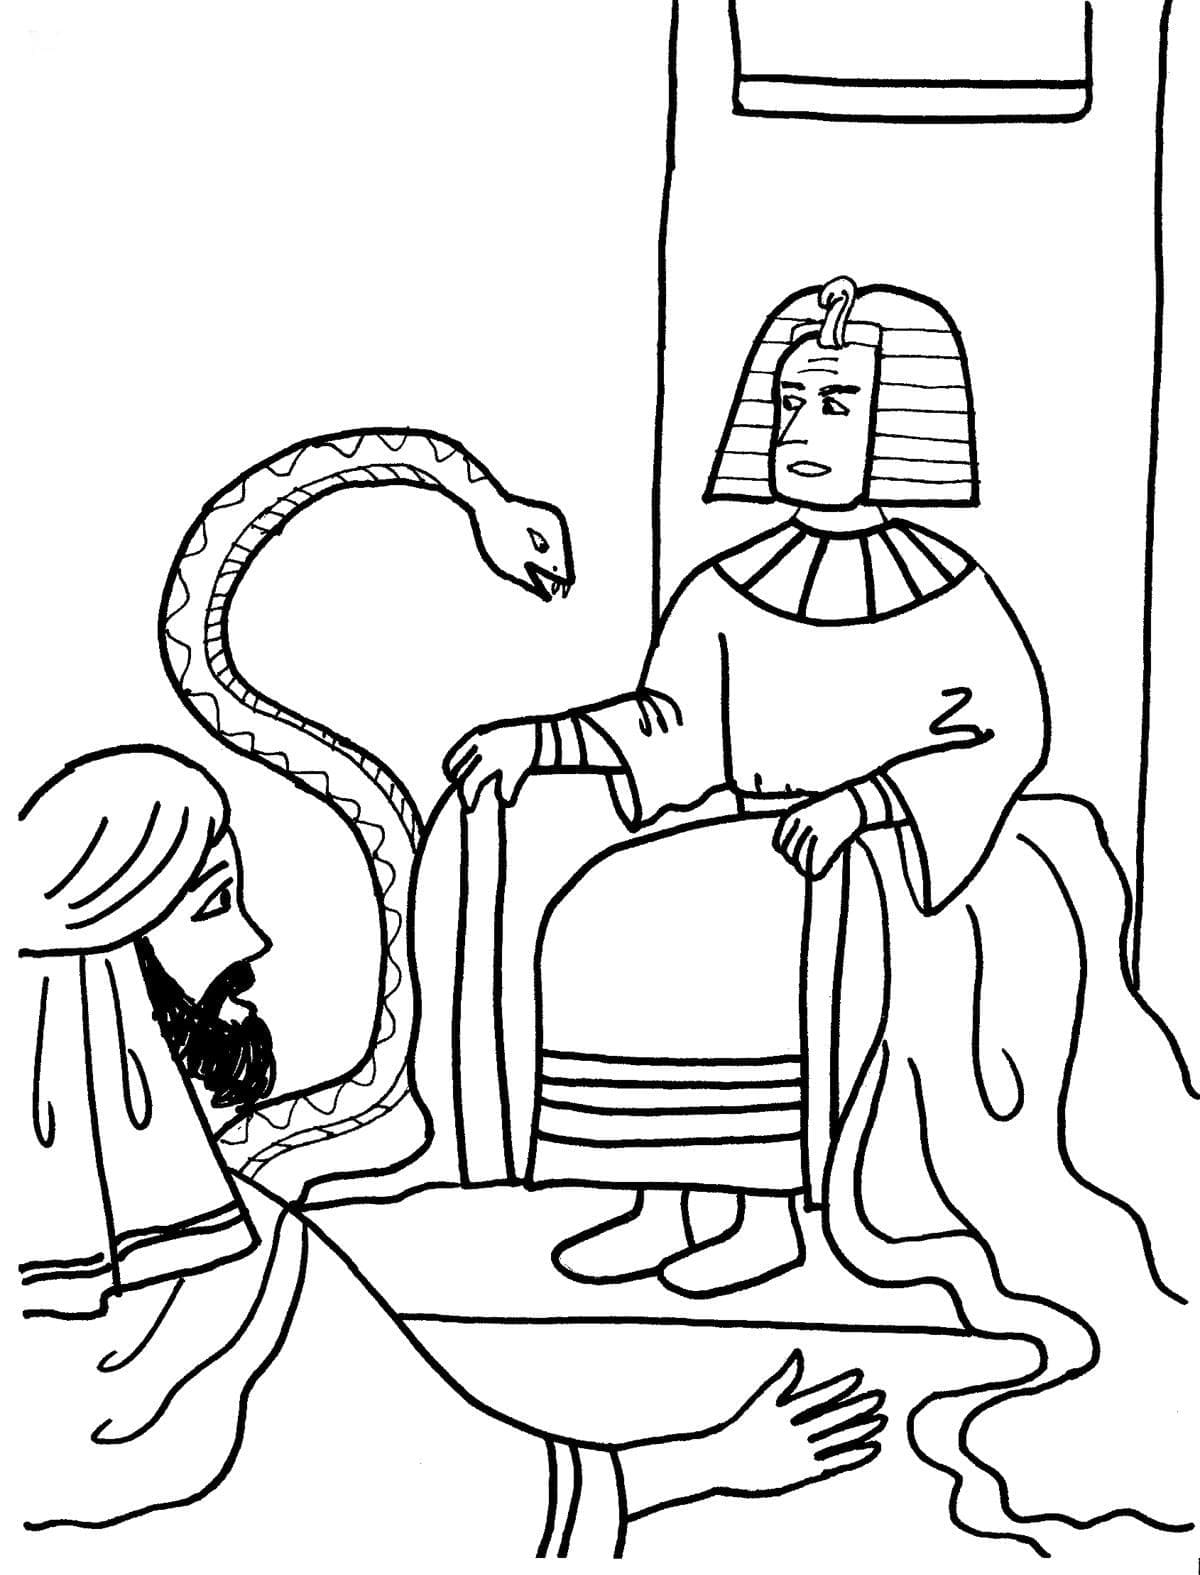 Le Pharaon coloring page